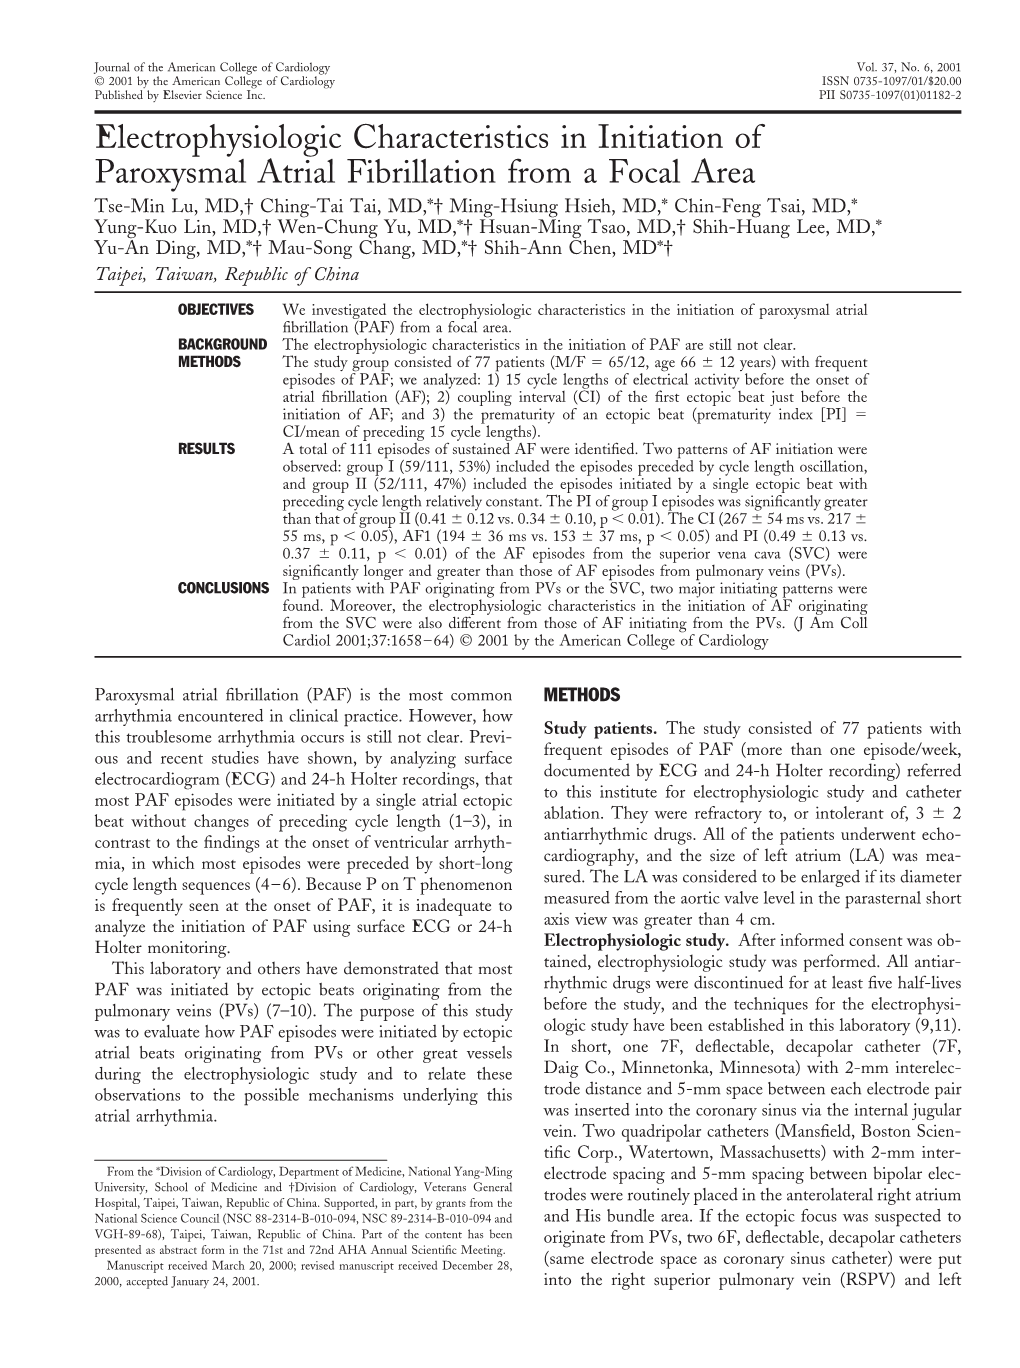 Electrophysiologic Characteristics in Initiation of Paroxysmal Atrial